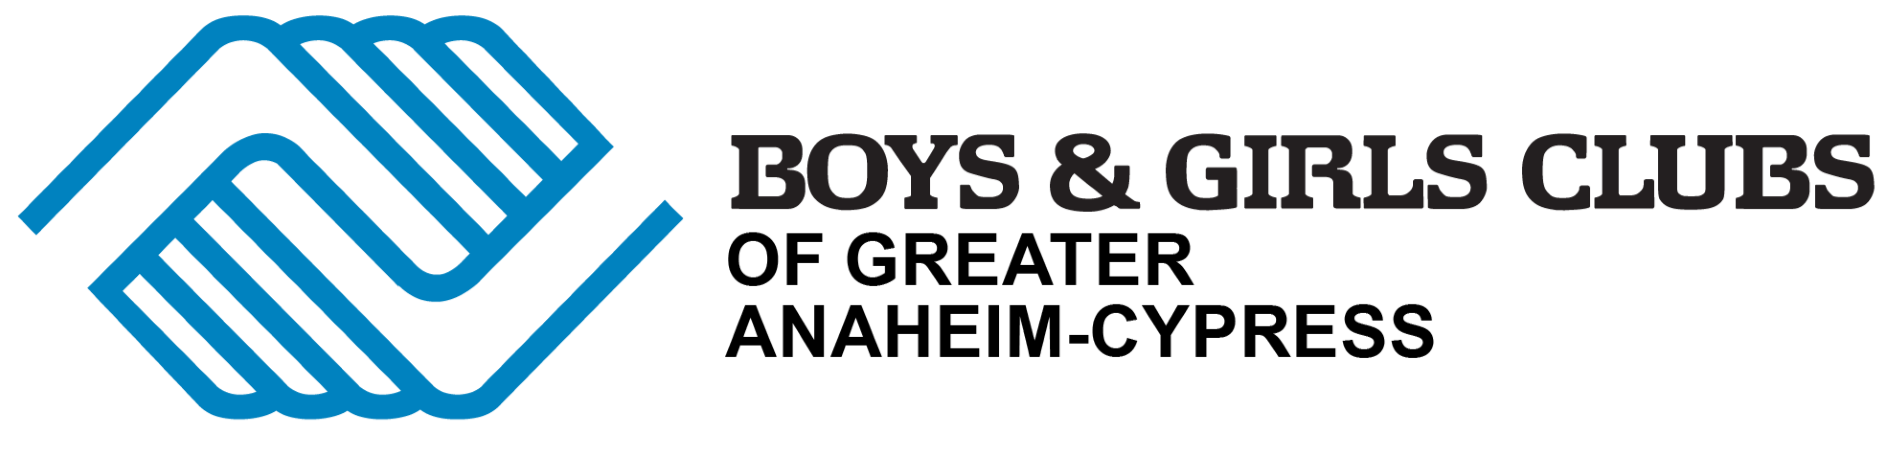 Boys & Girls Clubs of Greater Anaheim-Cypress